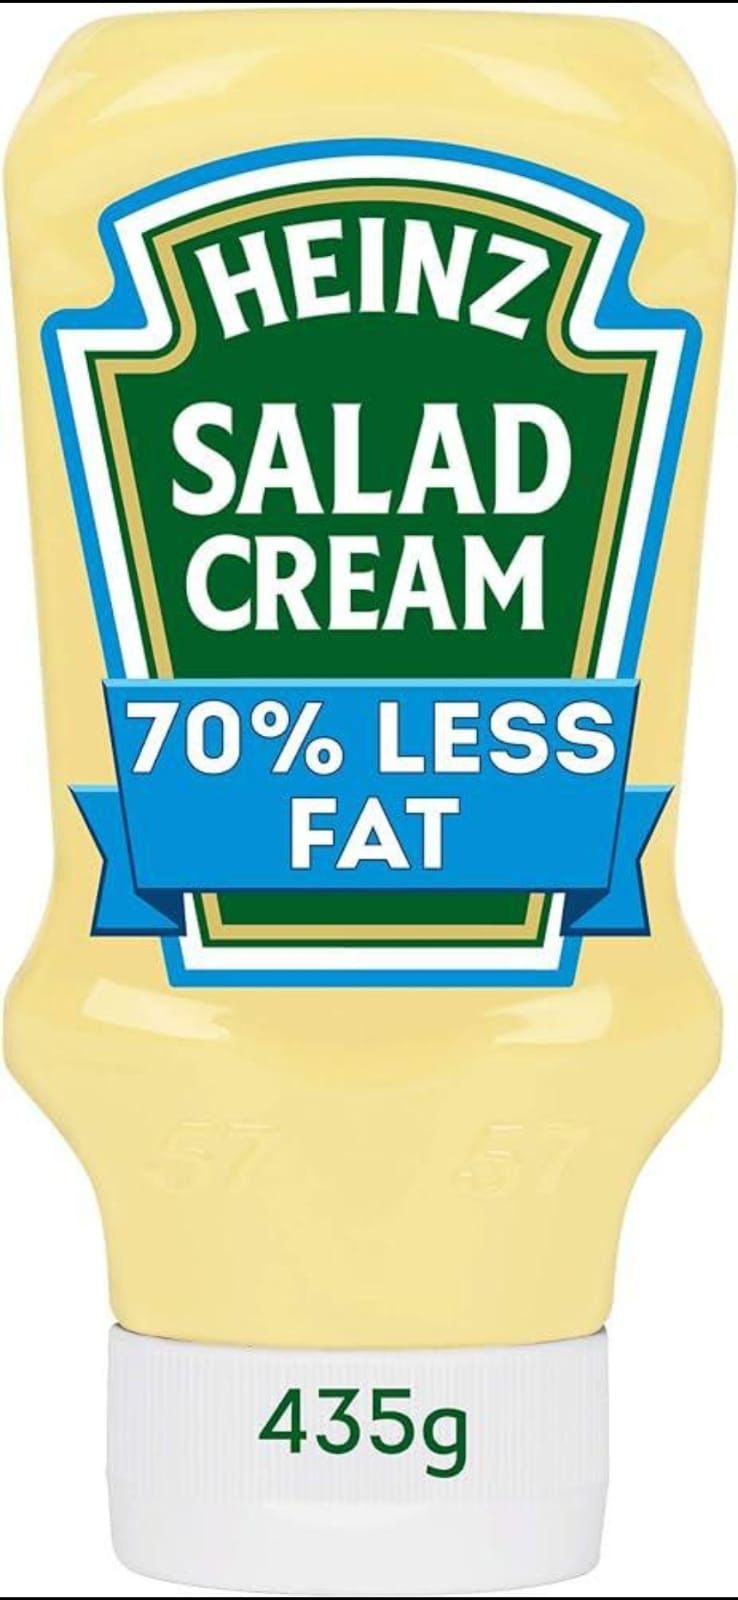 Heinz Salad Cream 435g  70% less fat upside down squeezy bottle  Bb 1/8/24